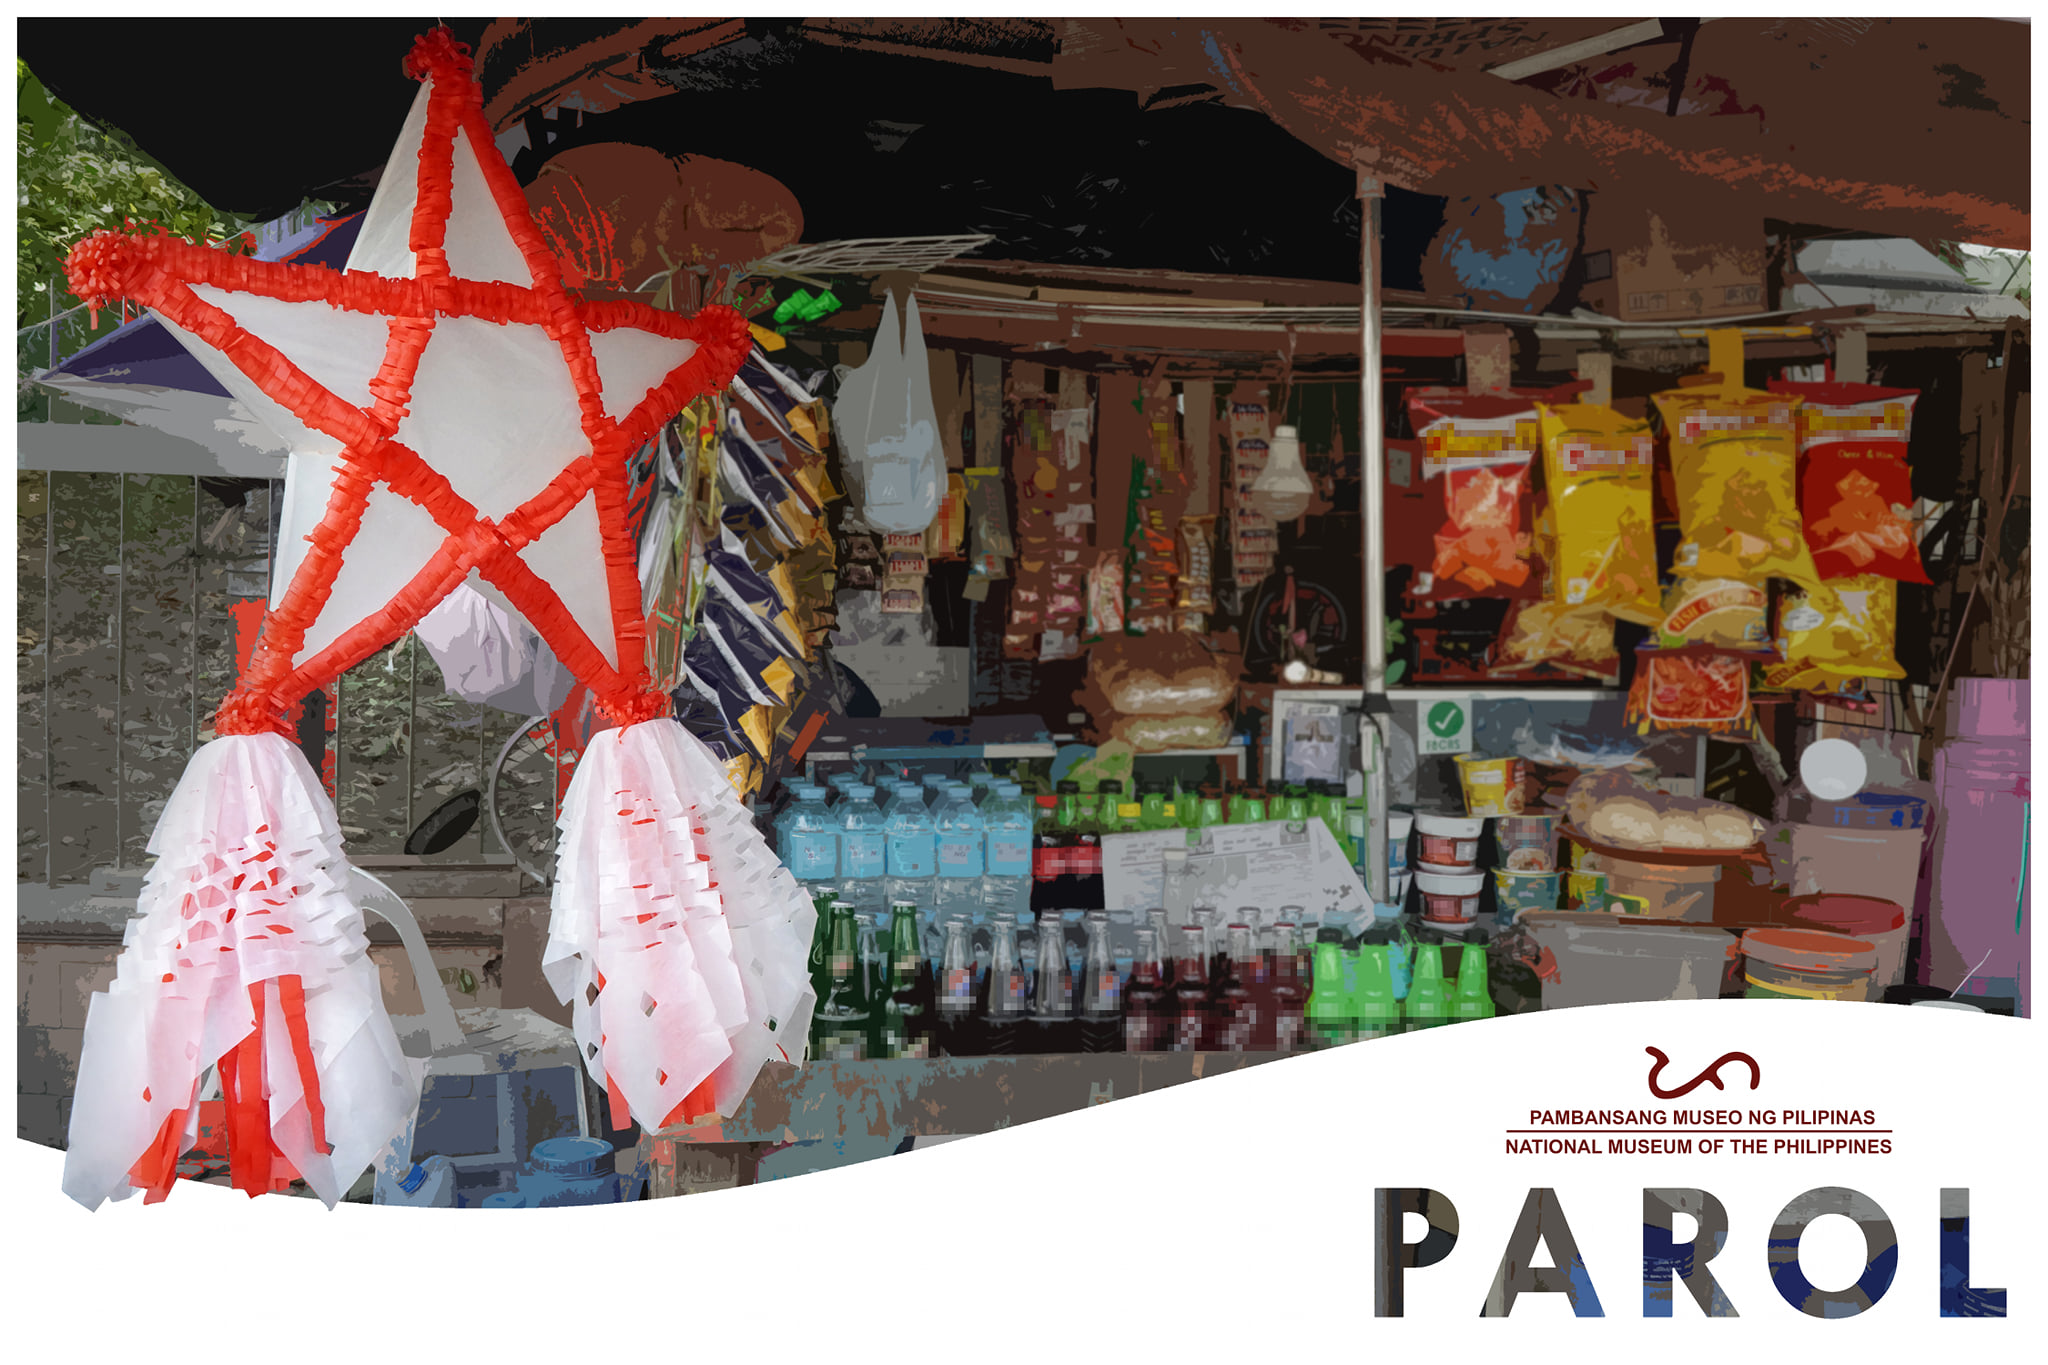 Parol or Philippine Christmas lantern